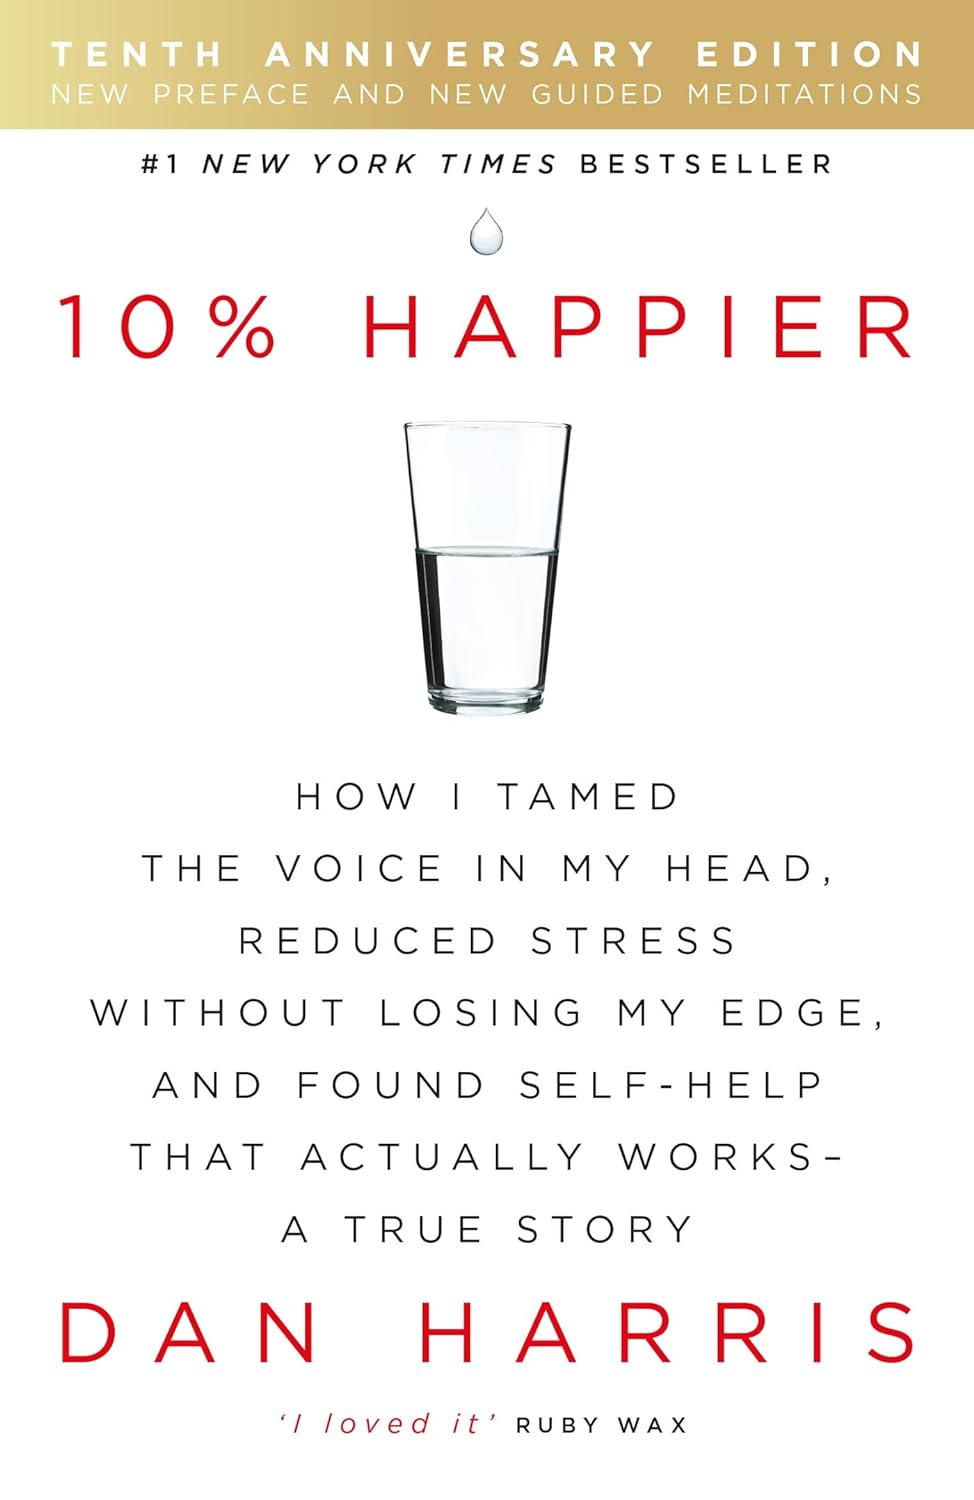 10% HAPPIER: Paperback by Dan Harris (Author)